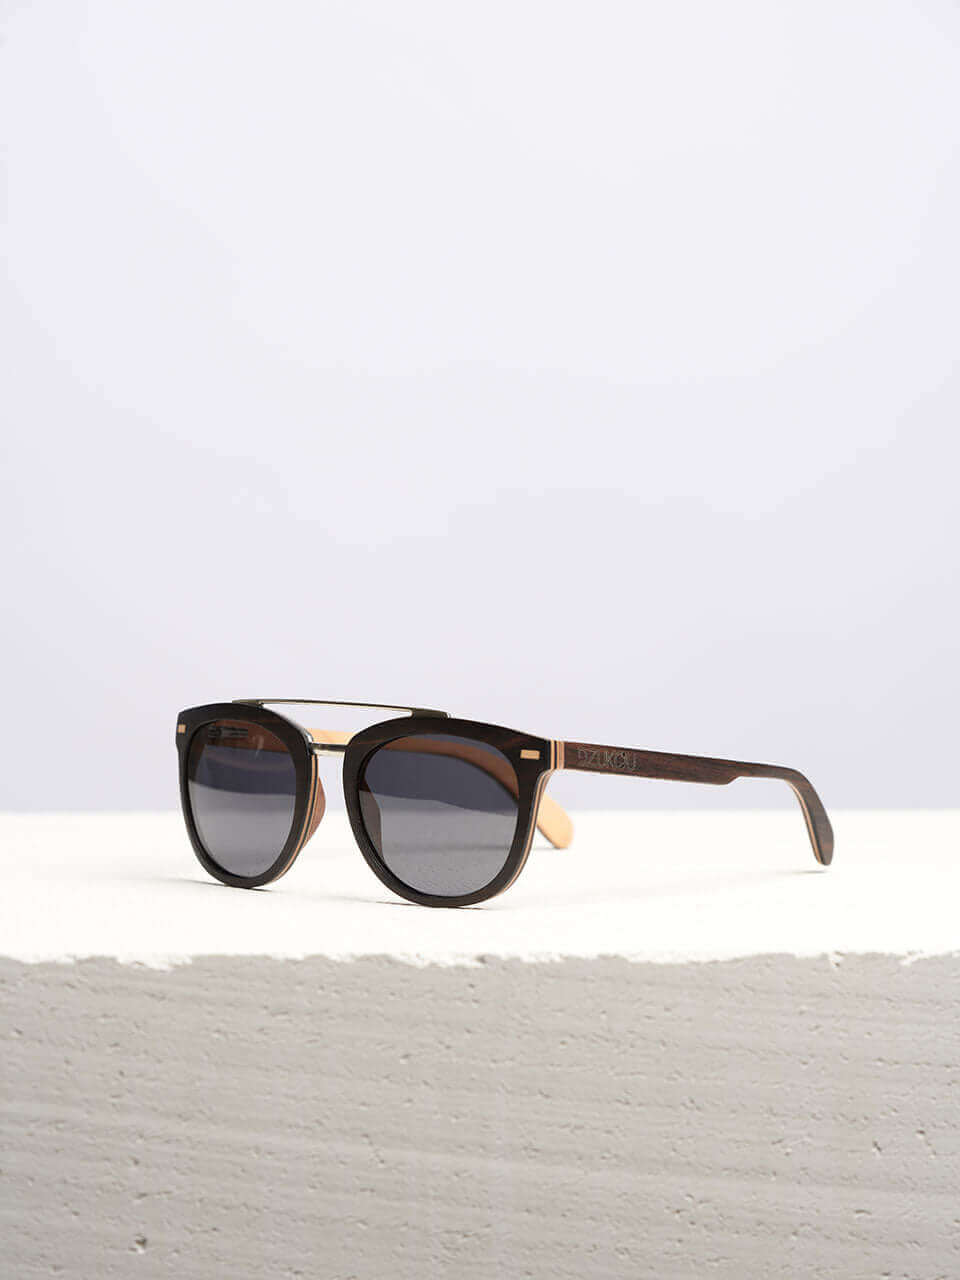 stylish sunglasses kept on a white platform